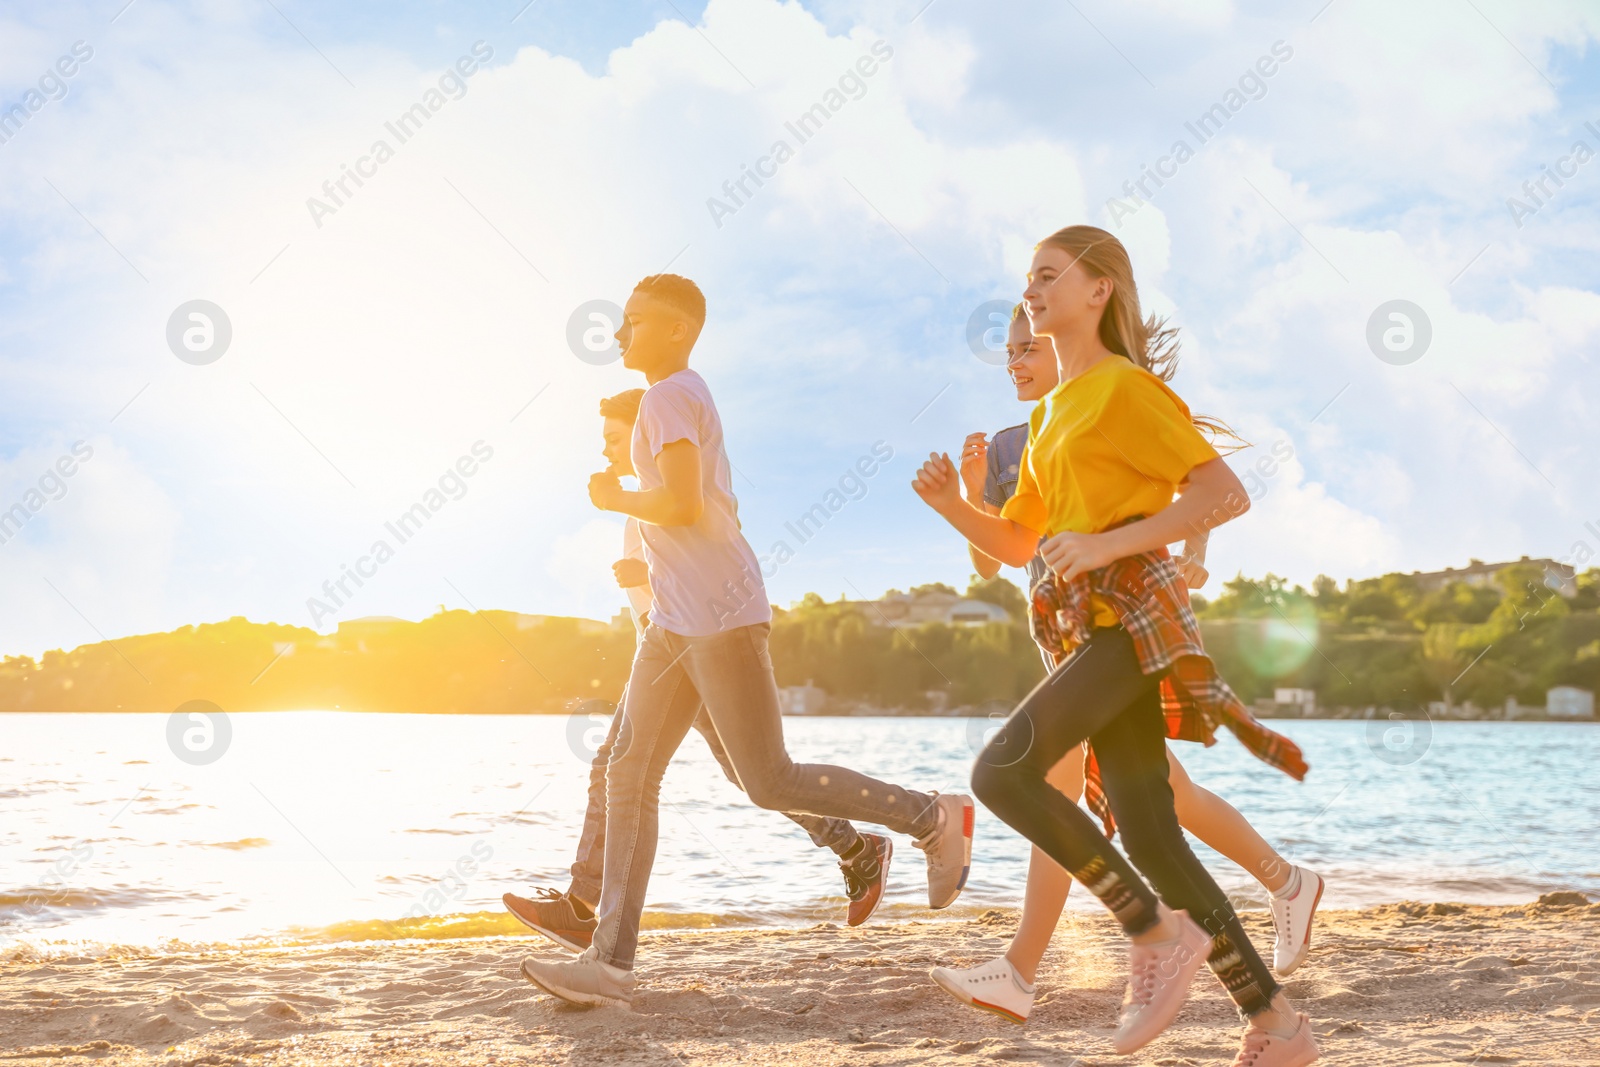 Image of School holidays. Group of happy children running on beach